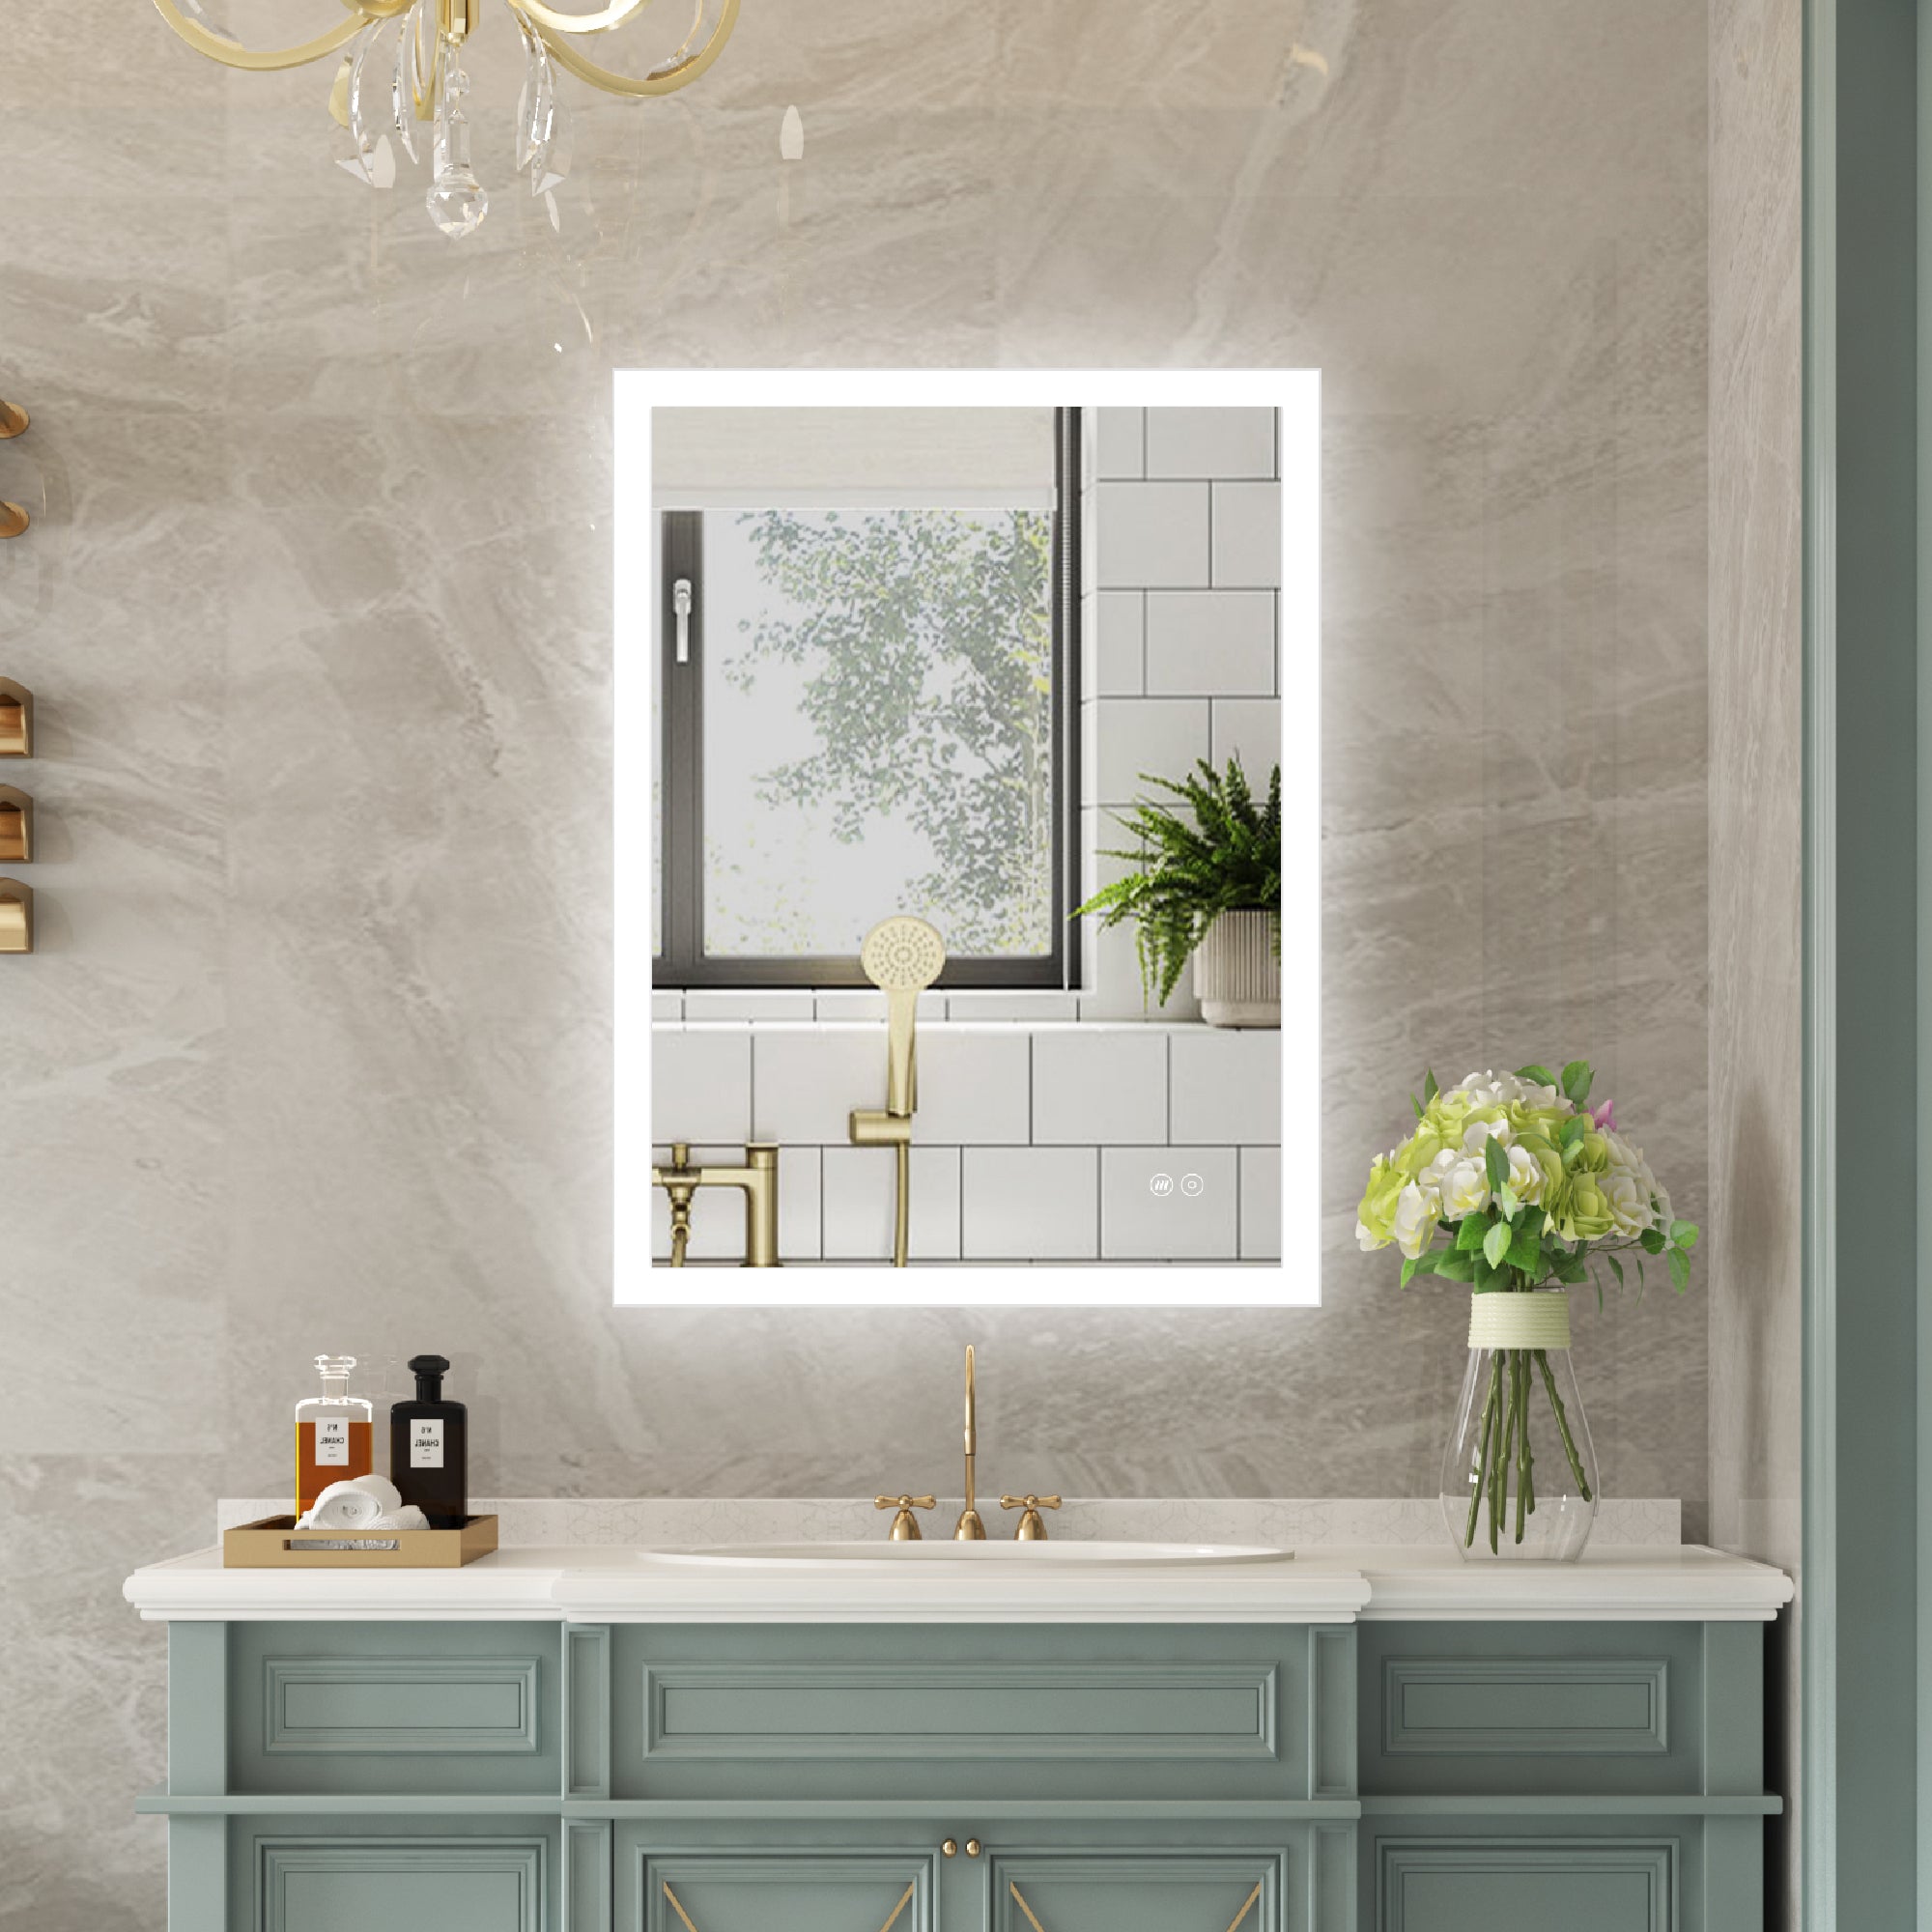 24 in. W x 32 in. H LED Light Mirror Rectangular Fog Free Frameless Bathroom Vanity Mirror-Arrisea